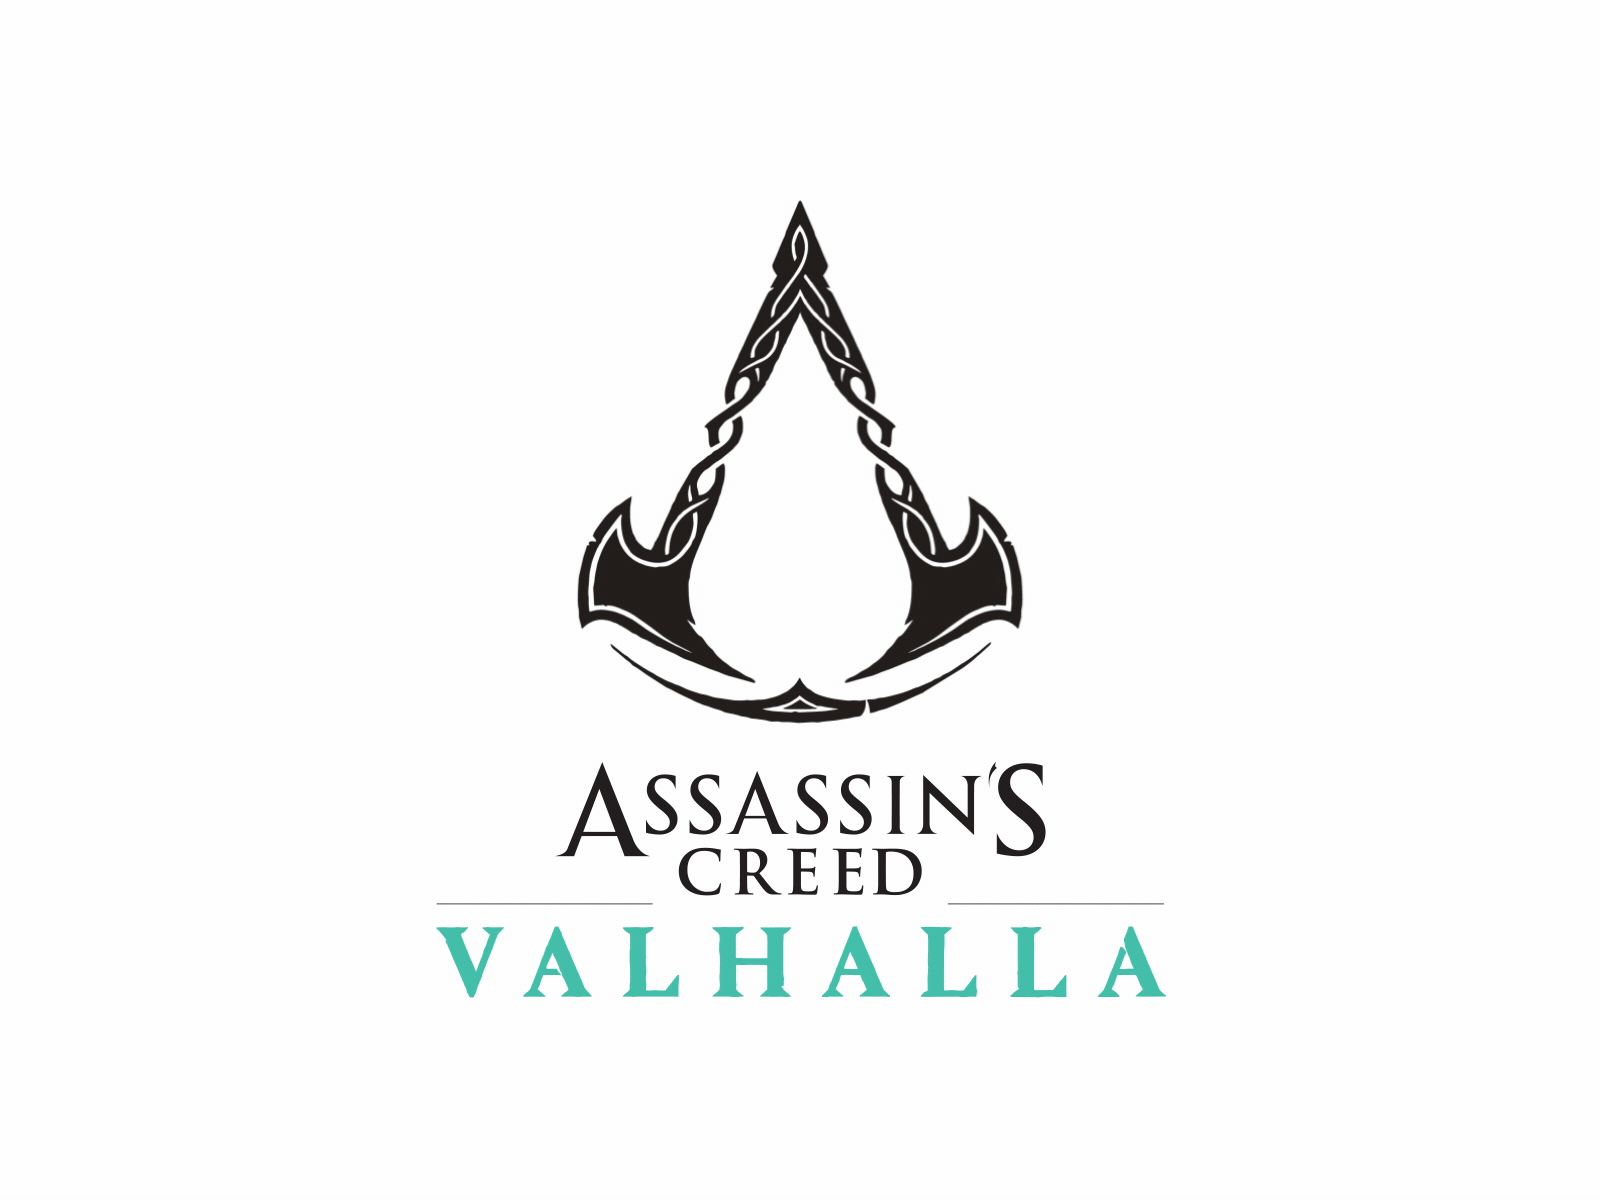 Assassin's creed - Valhalla | Intro Logo Animation